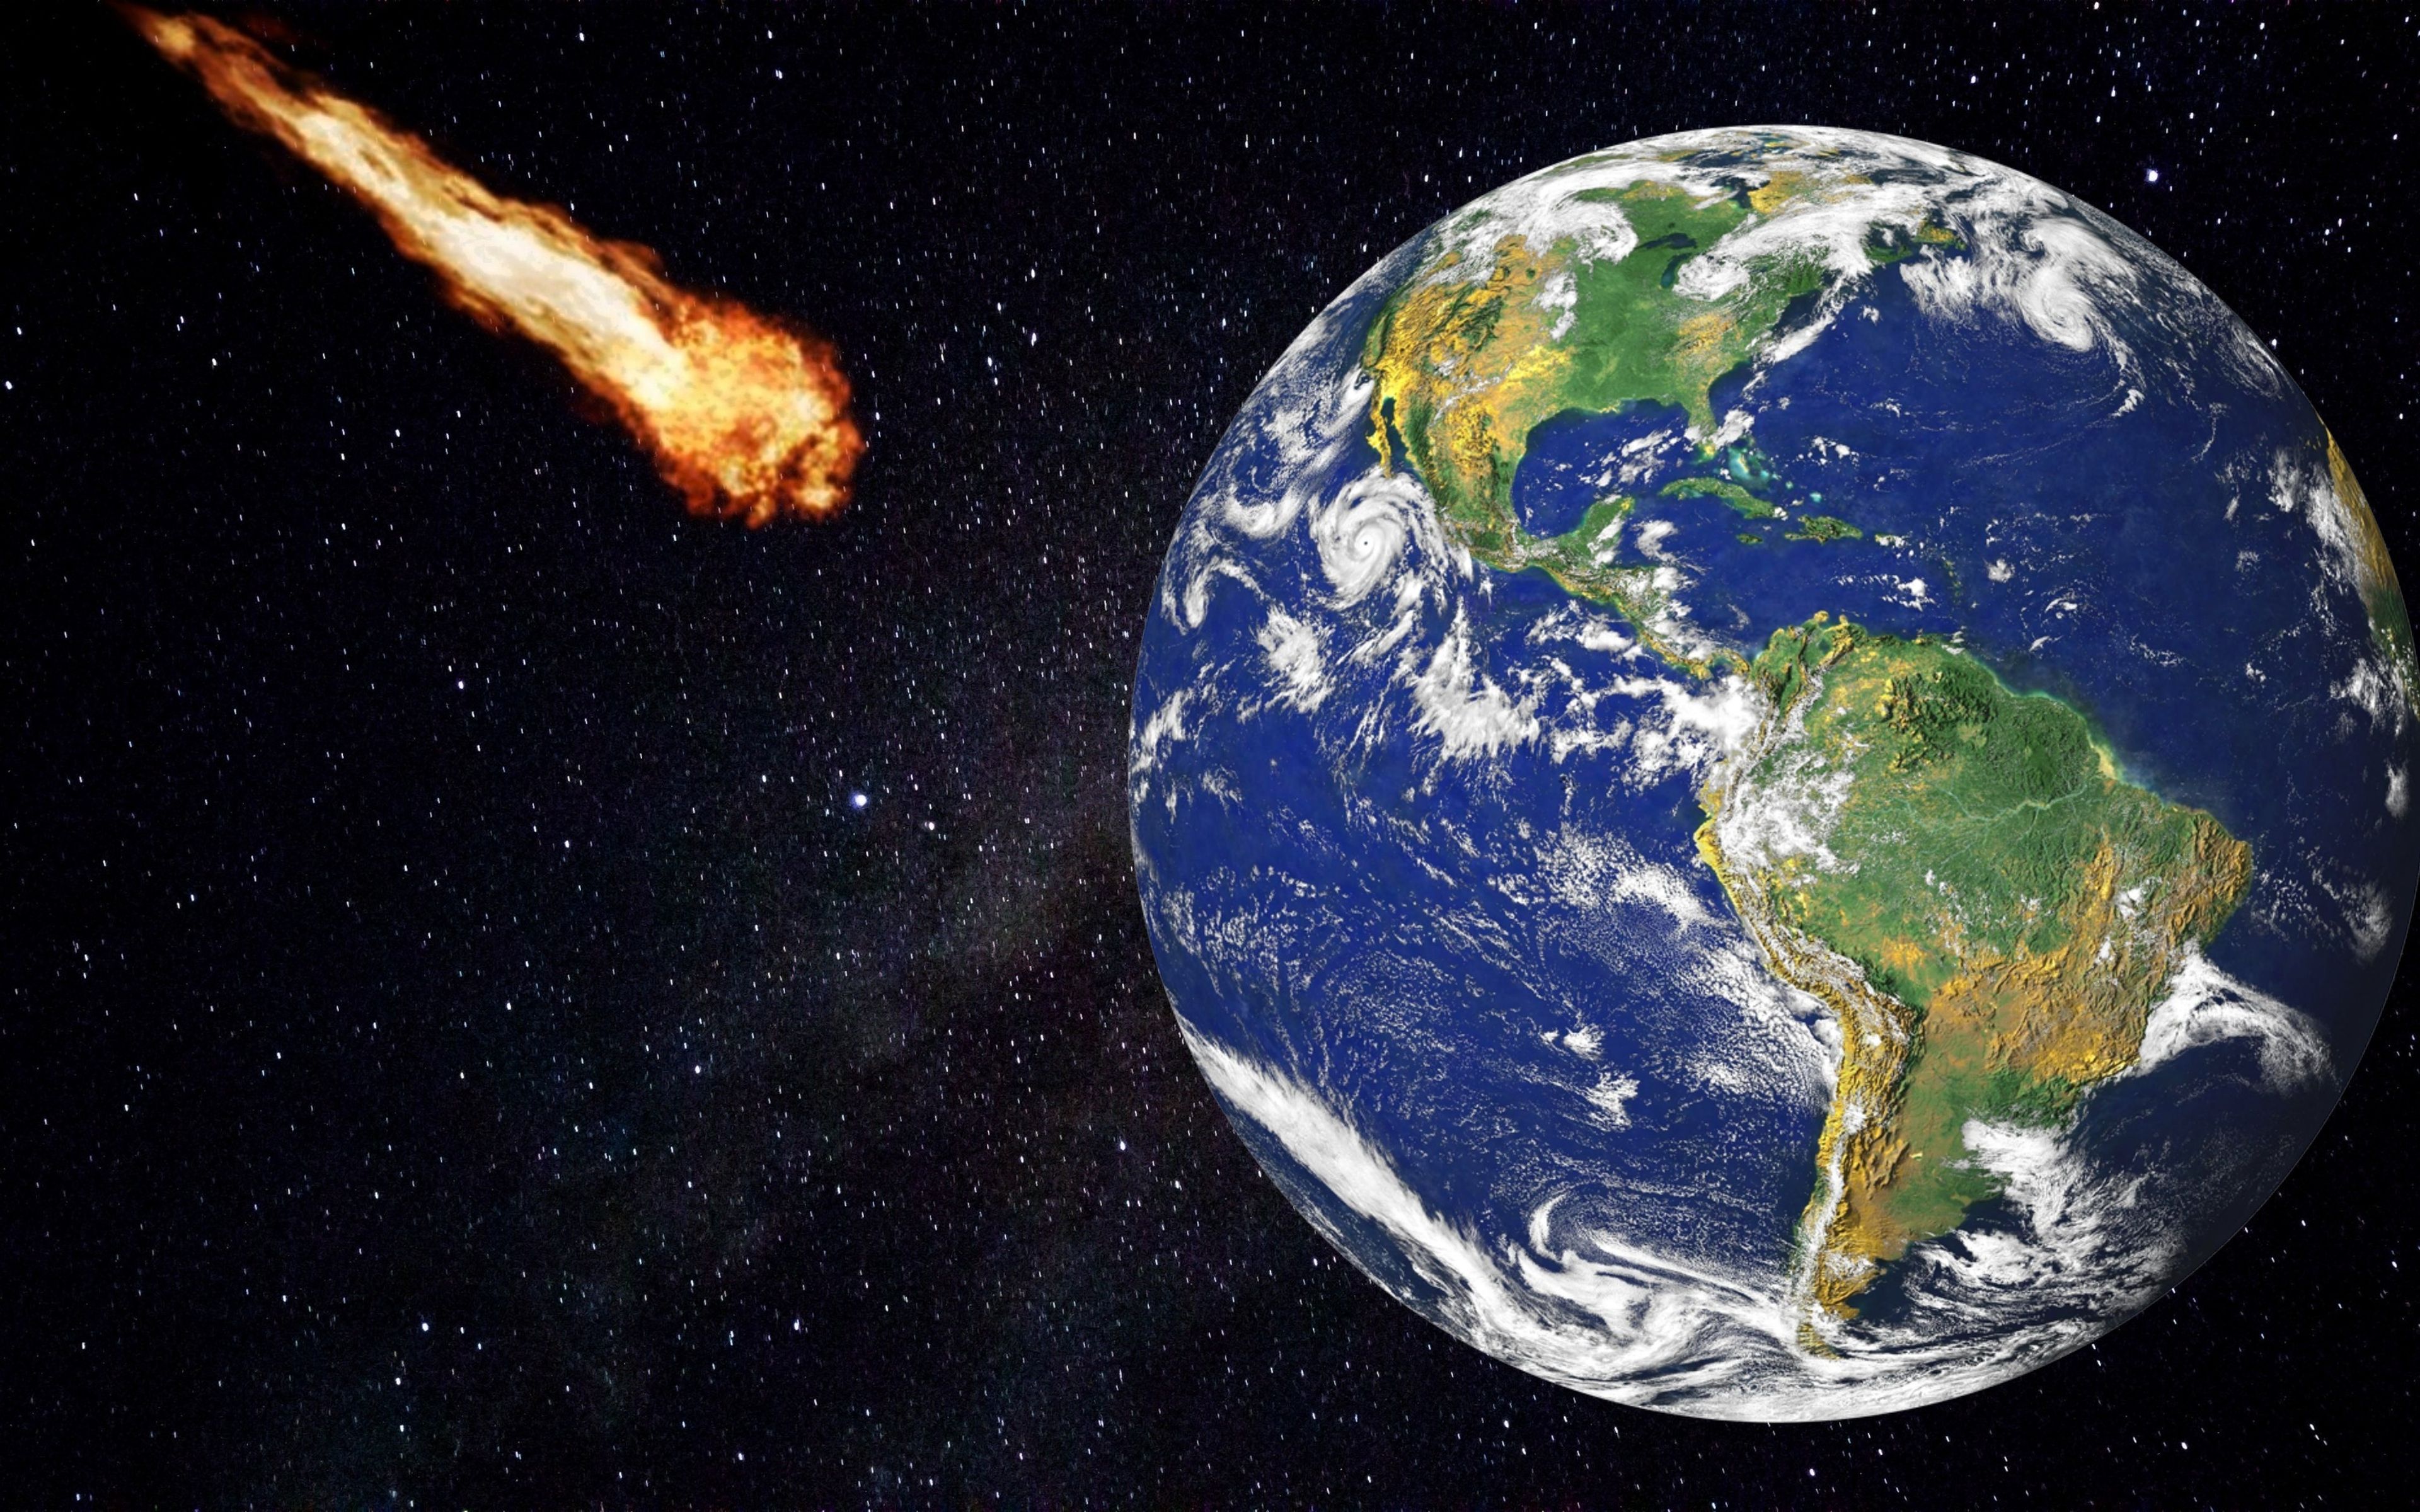 asteroide potencialmente peligroso Tierra